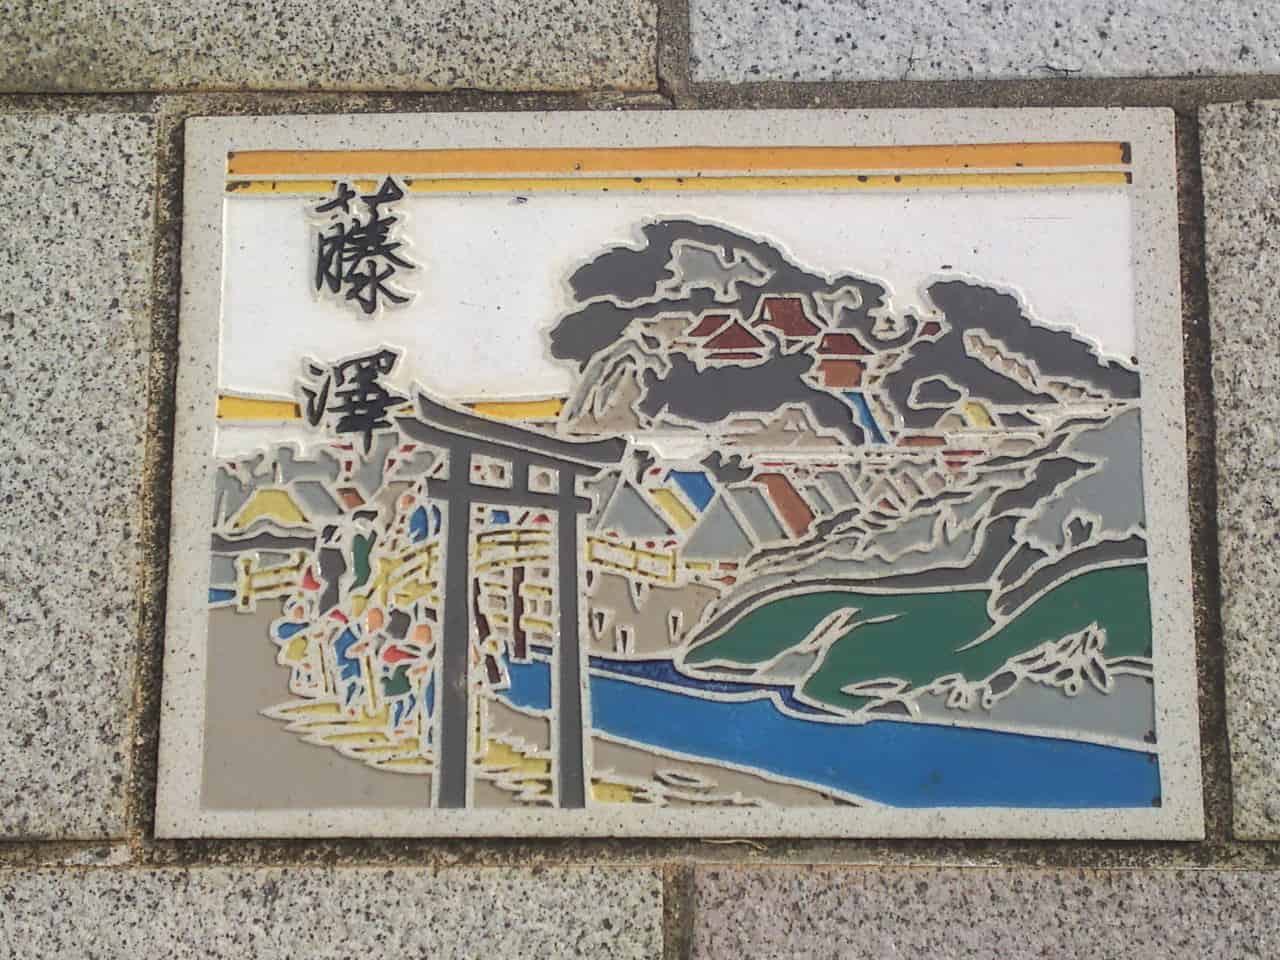 station,ukiyoe,ukiyo,e,tokaido,Tōkaidō,Utagawa,Hiroshige,Shizuoka,woodblock,painting